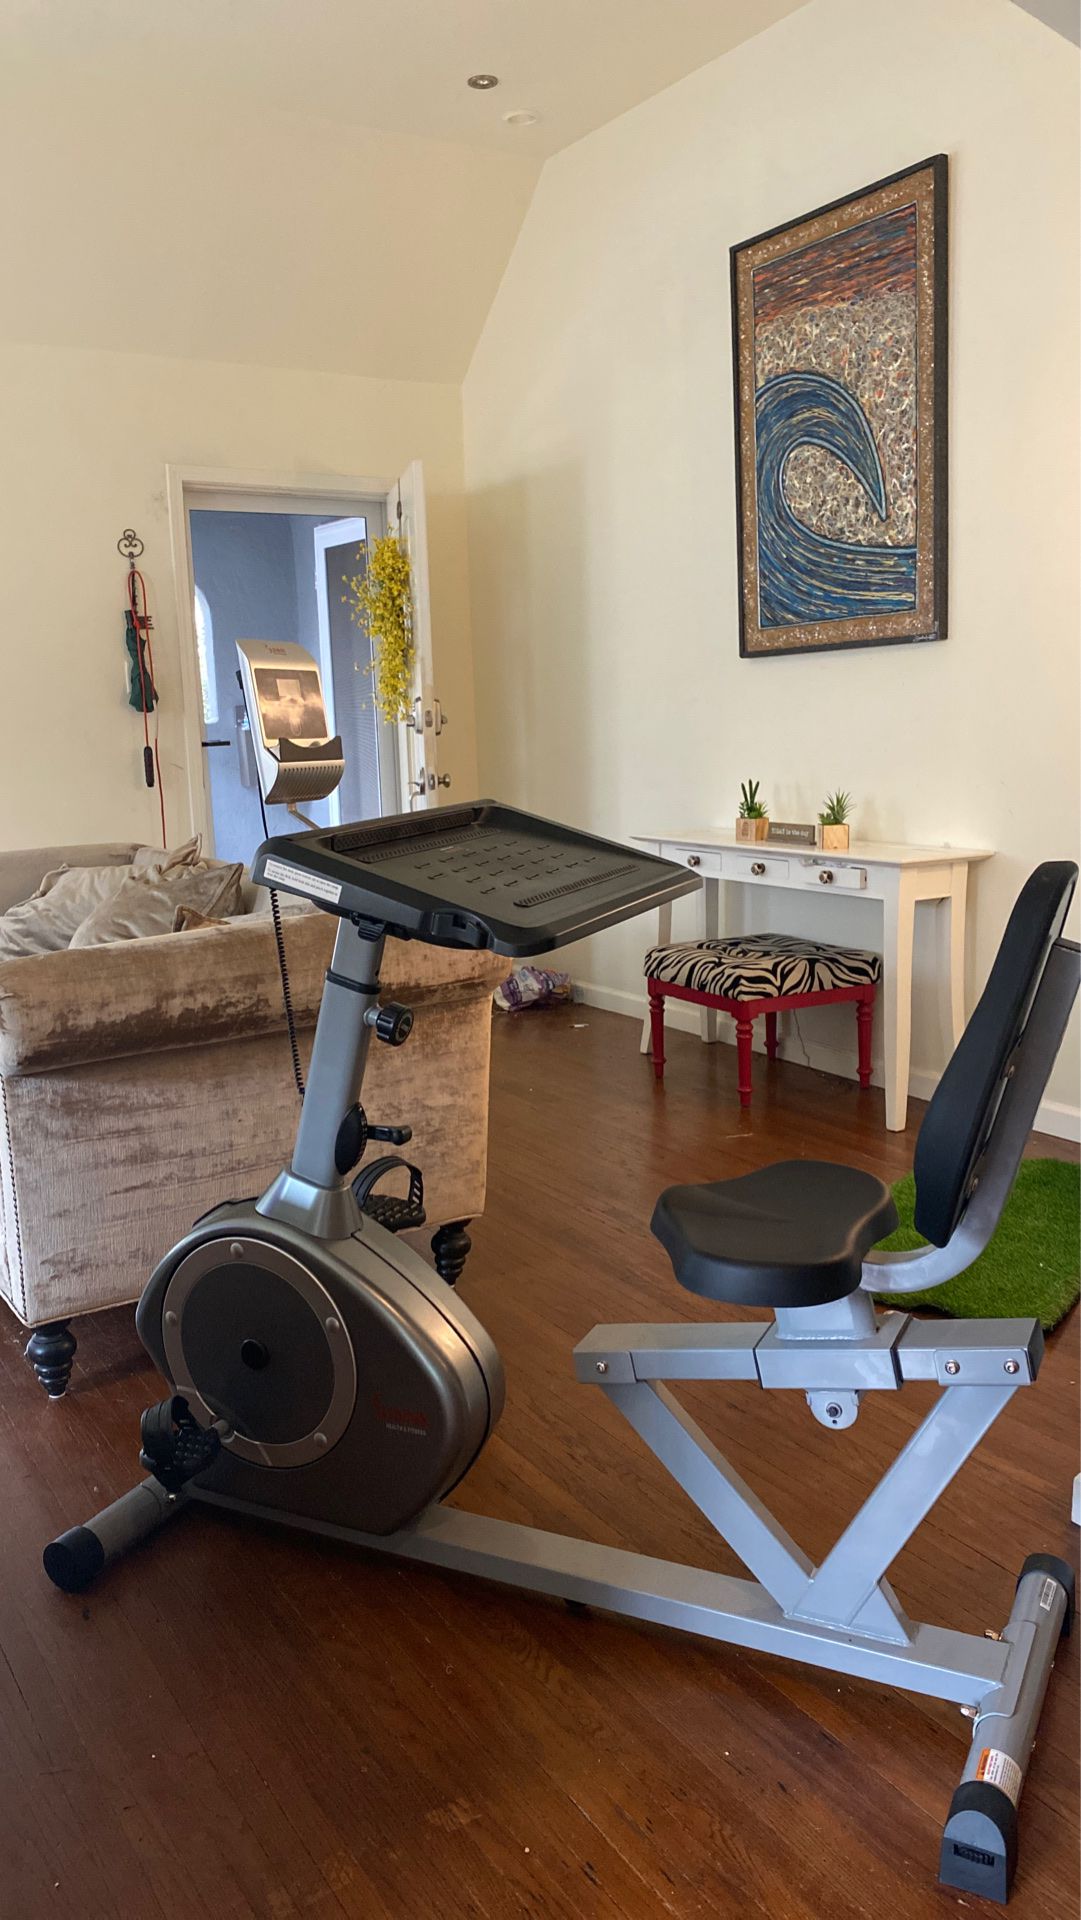 Sunny Health & Fitness Magnetic Recumbent Desk Exercise Bike